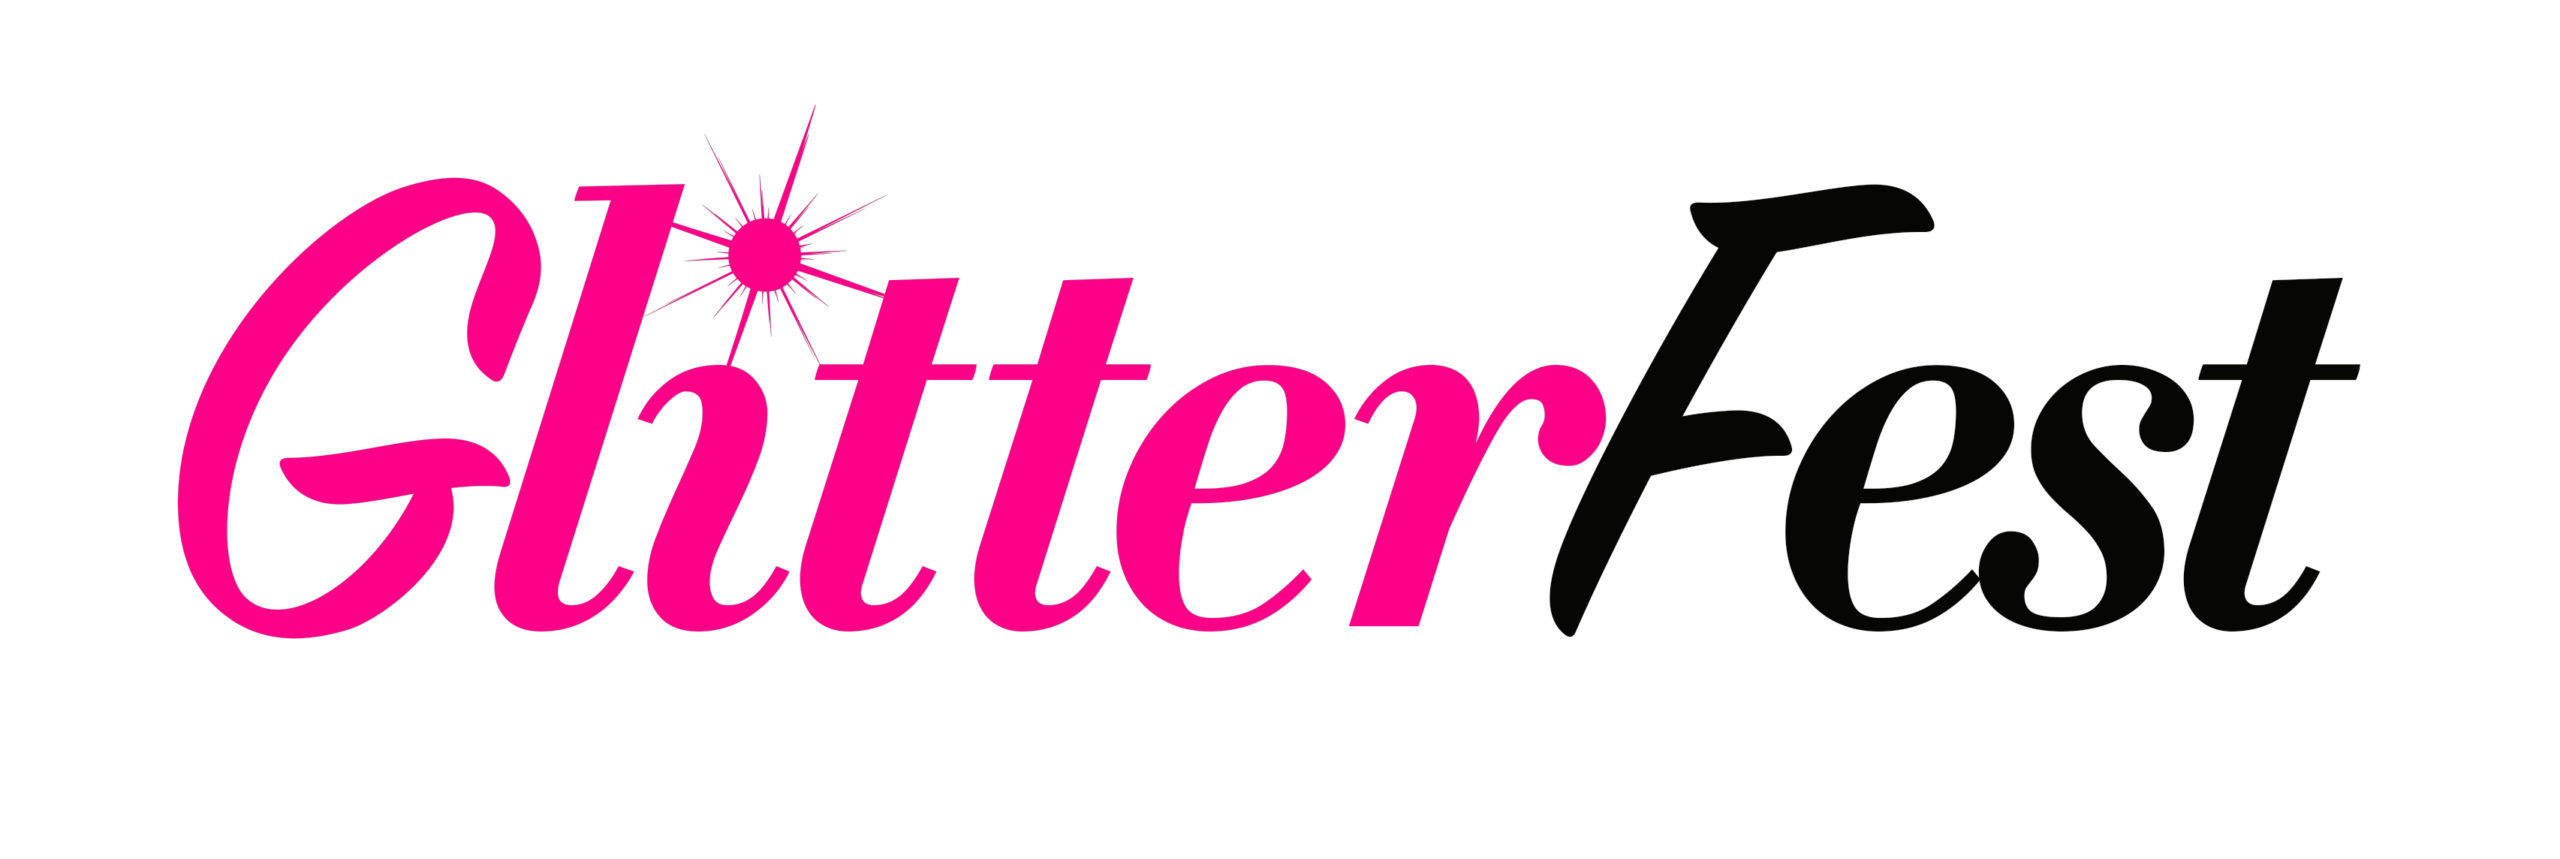 Glitterfest™